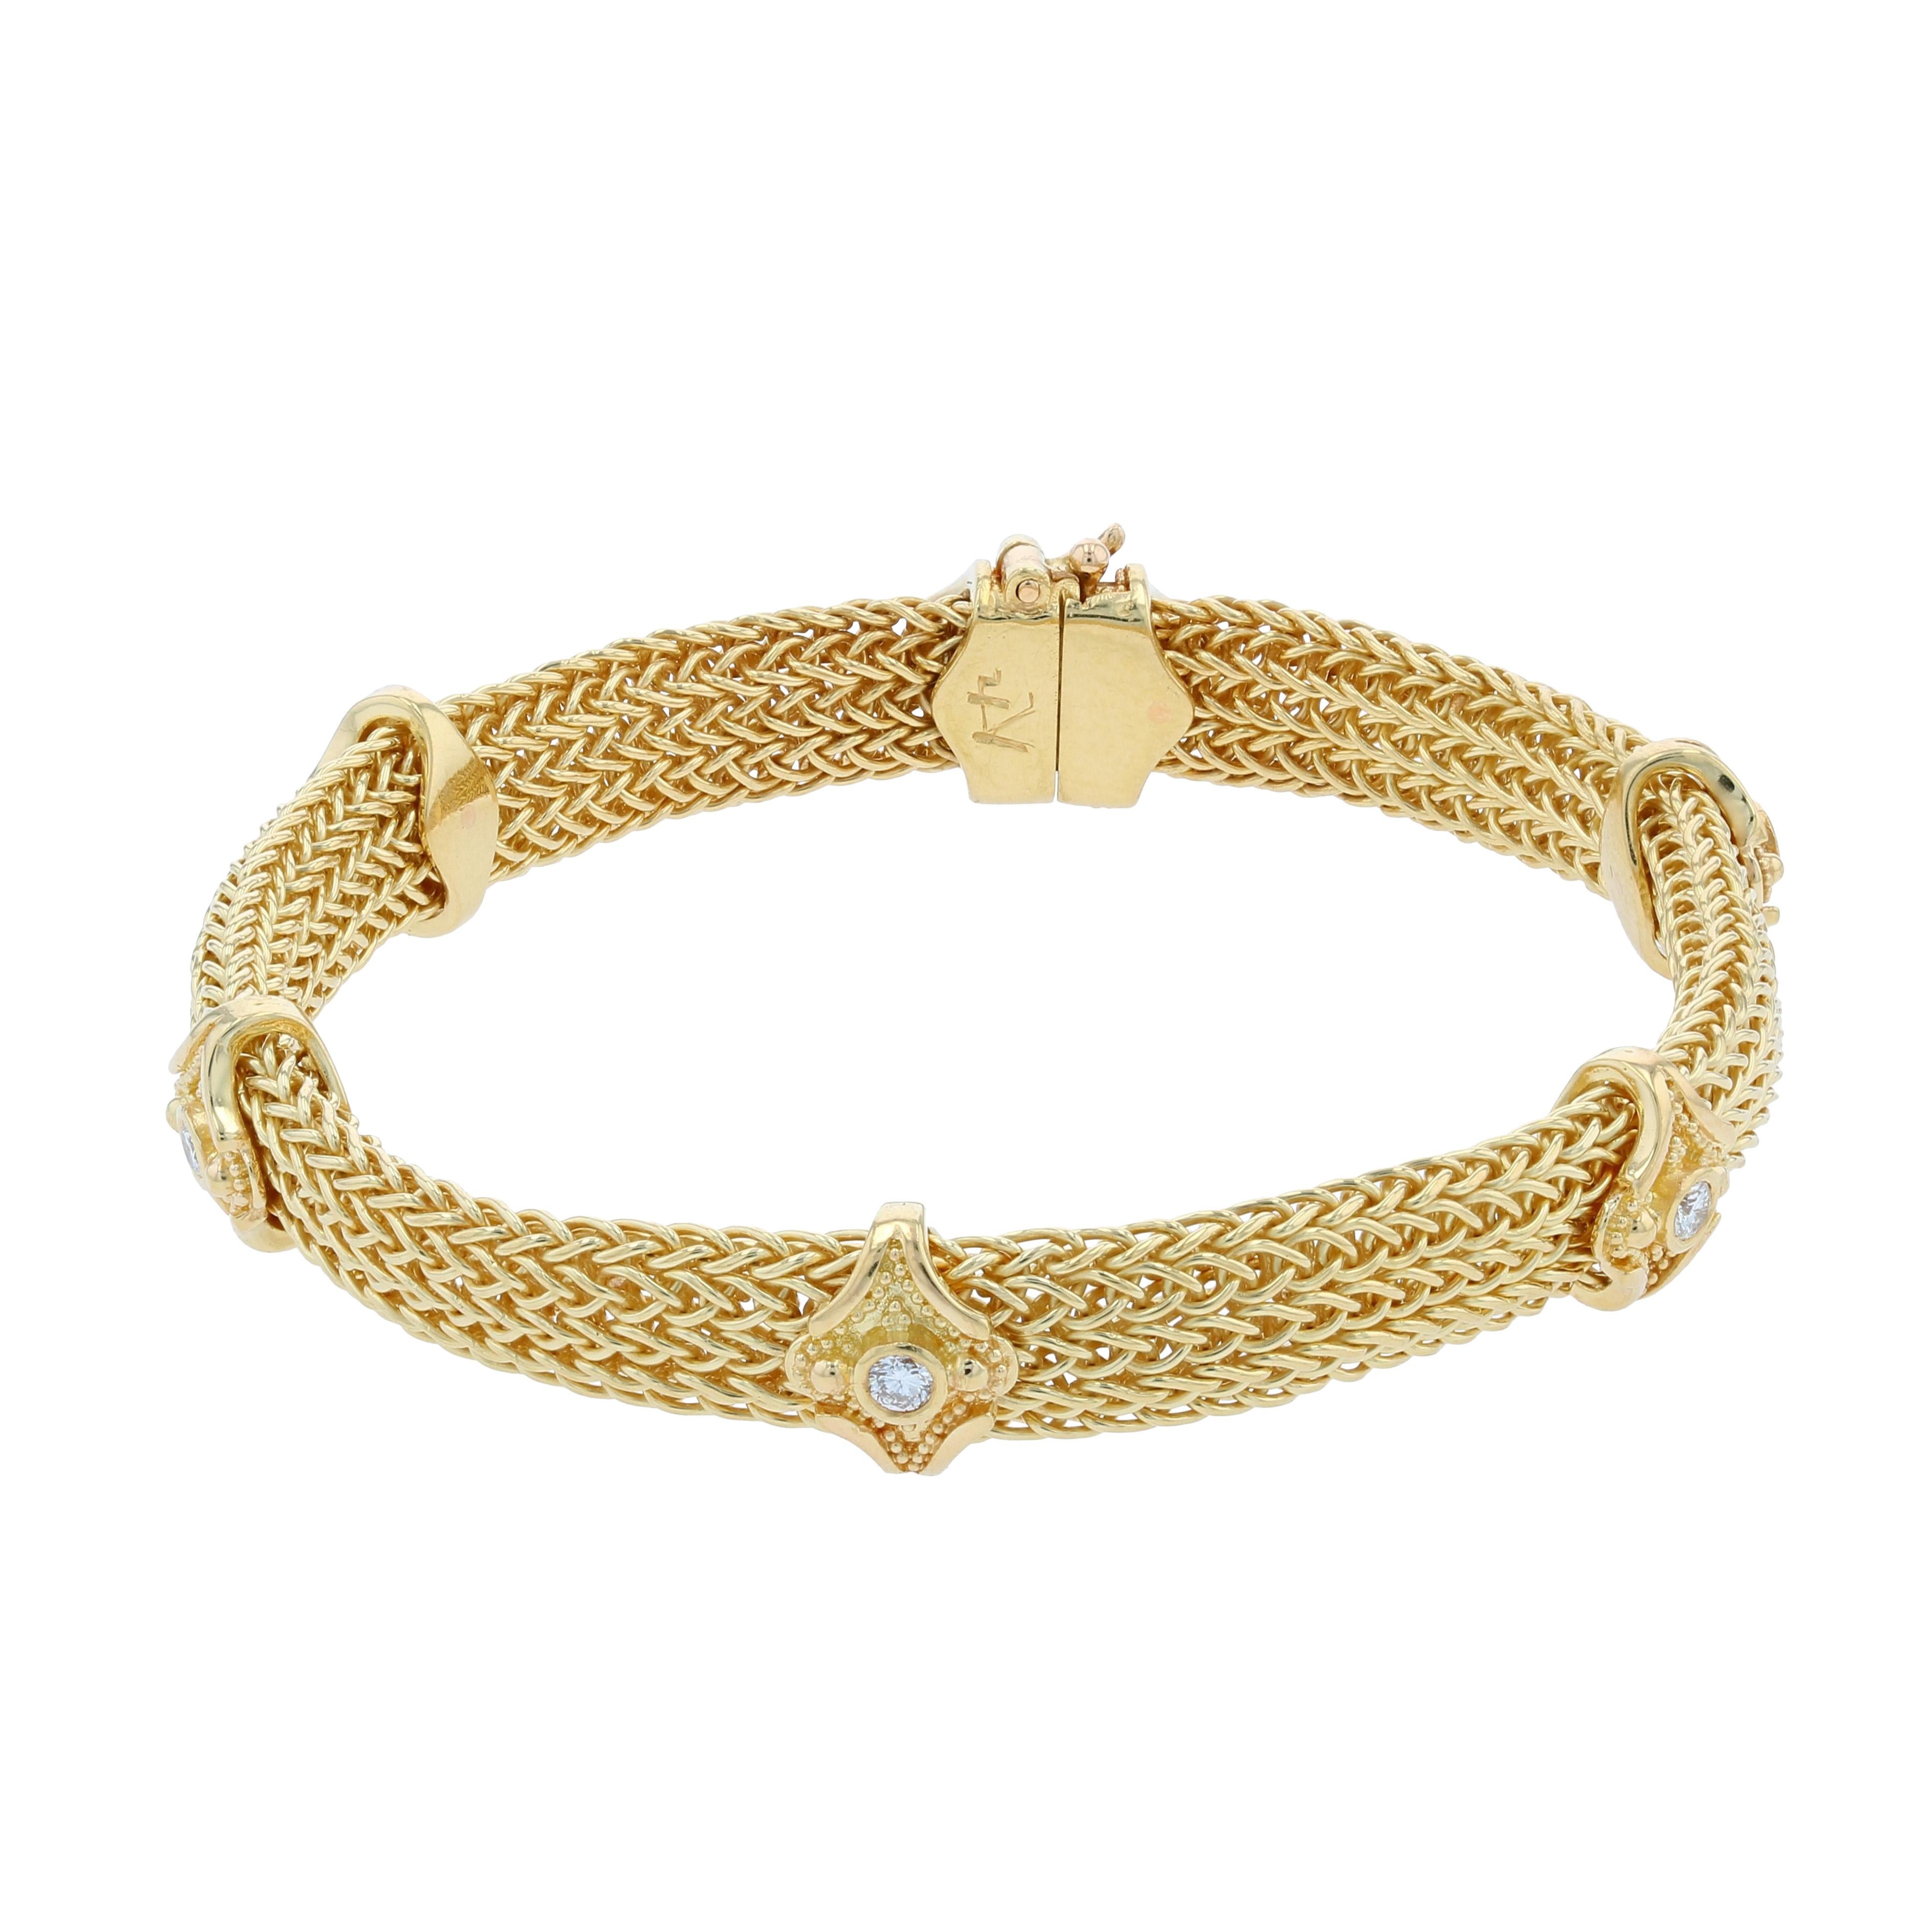 Artisan Kent Raible 18 Karat Gold Woven Chain Bracelet with Diamonds and Granulation